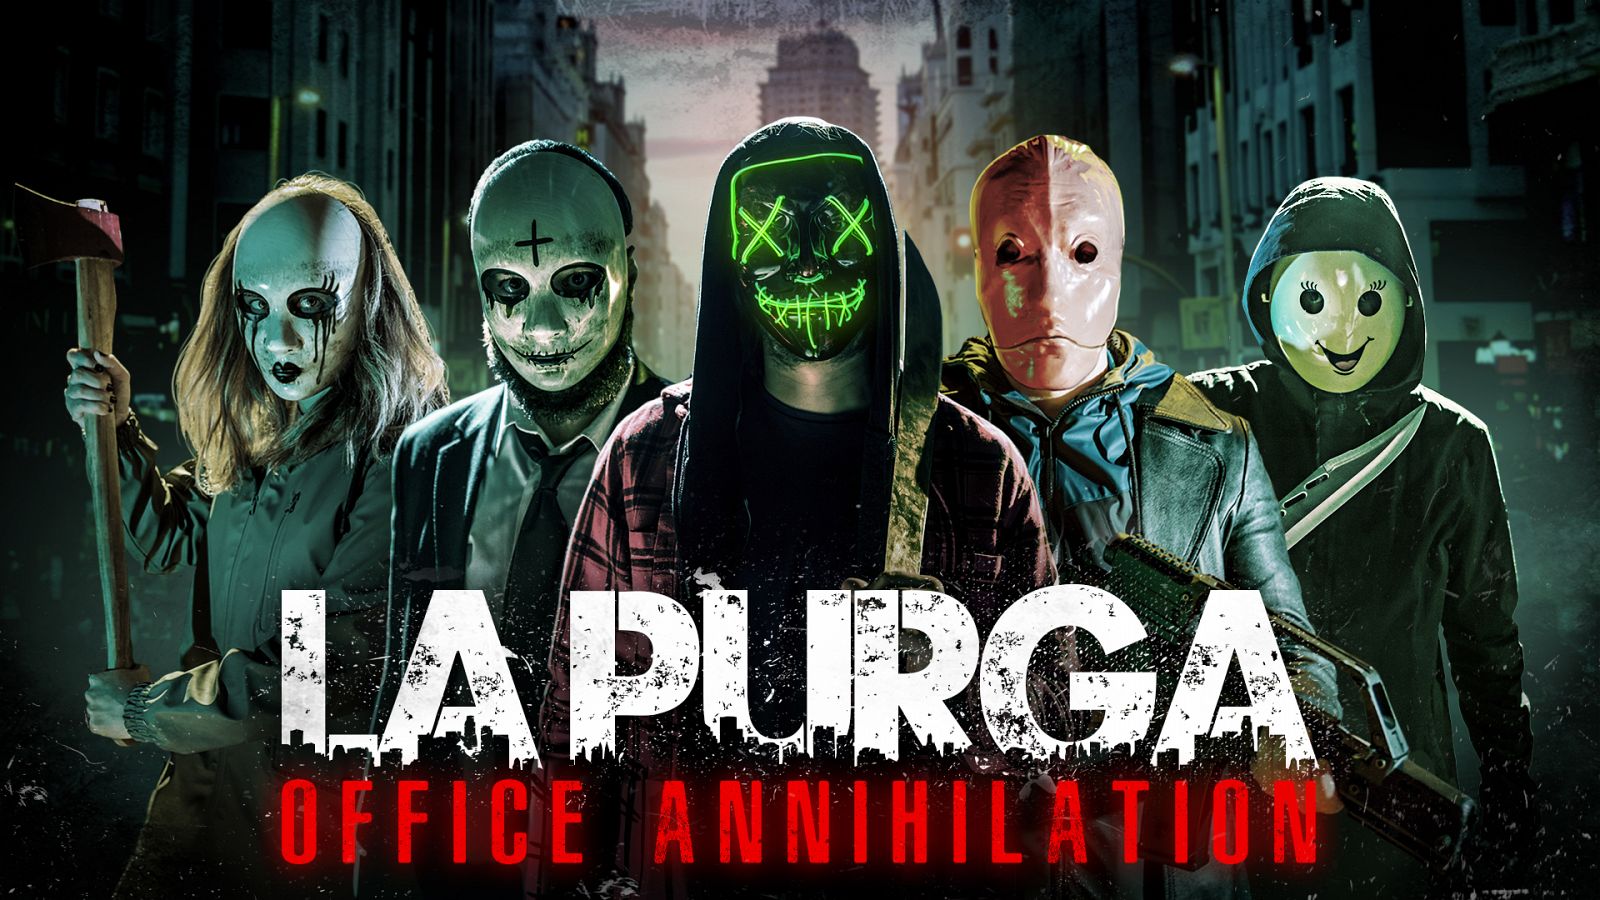 Neverfilms - Mira ya 'La purga annihilation'